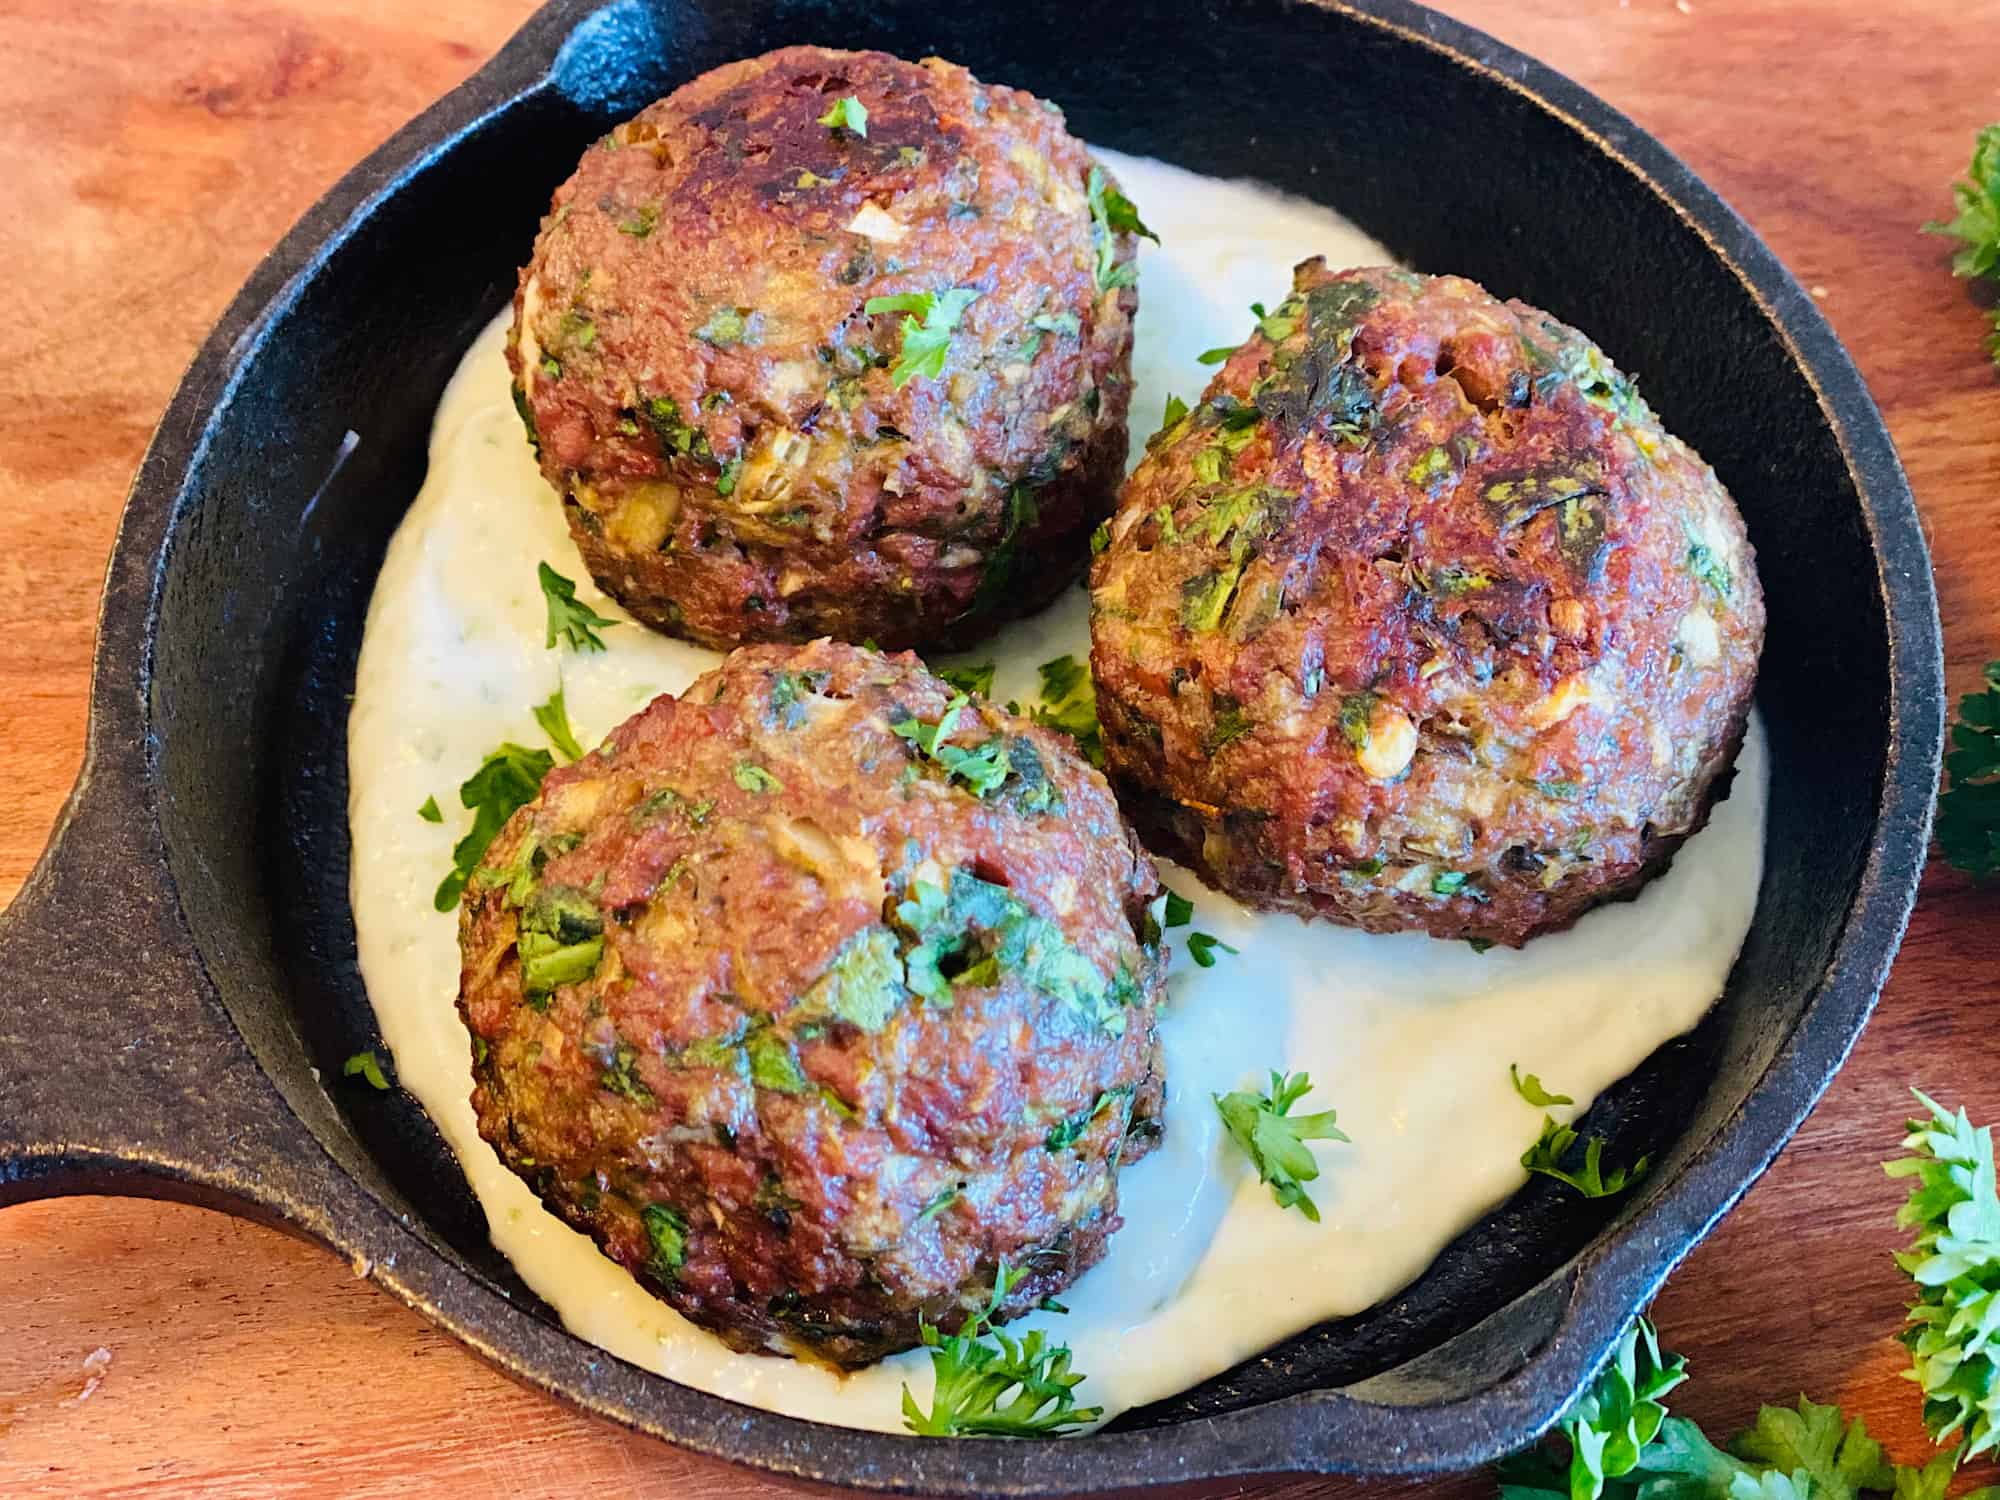 Vegan Greek Meatballs with Creamy Tzatziki Sauce